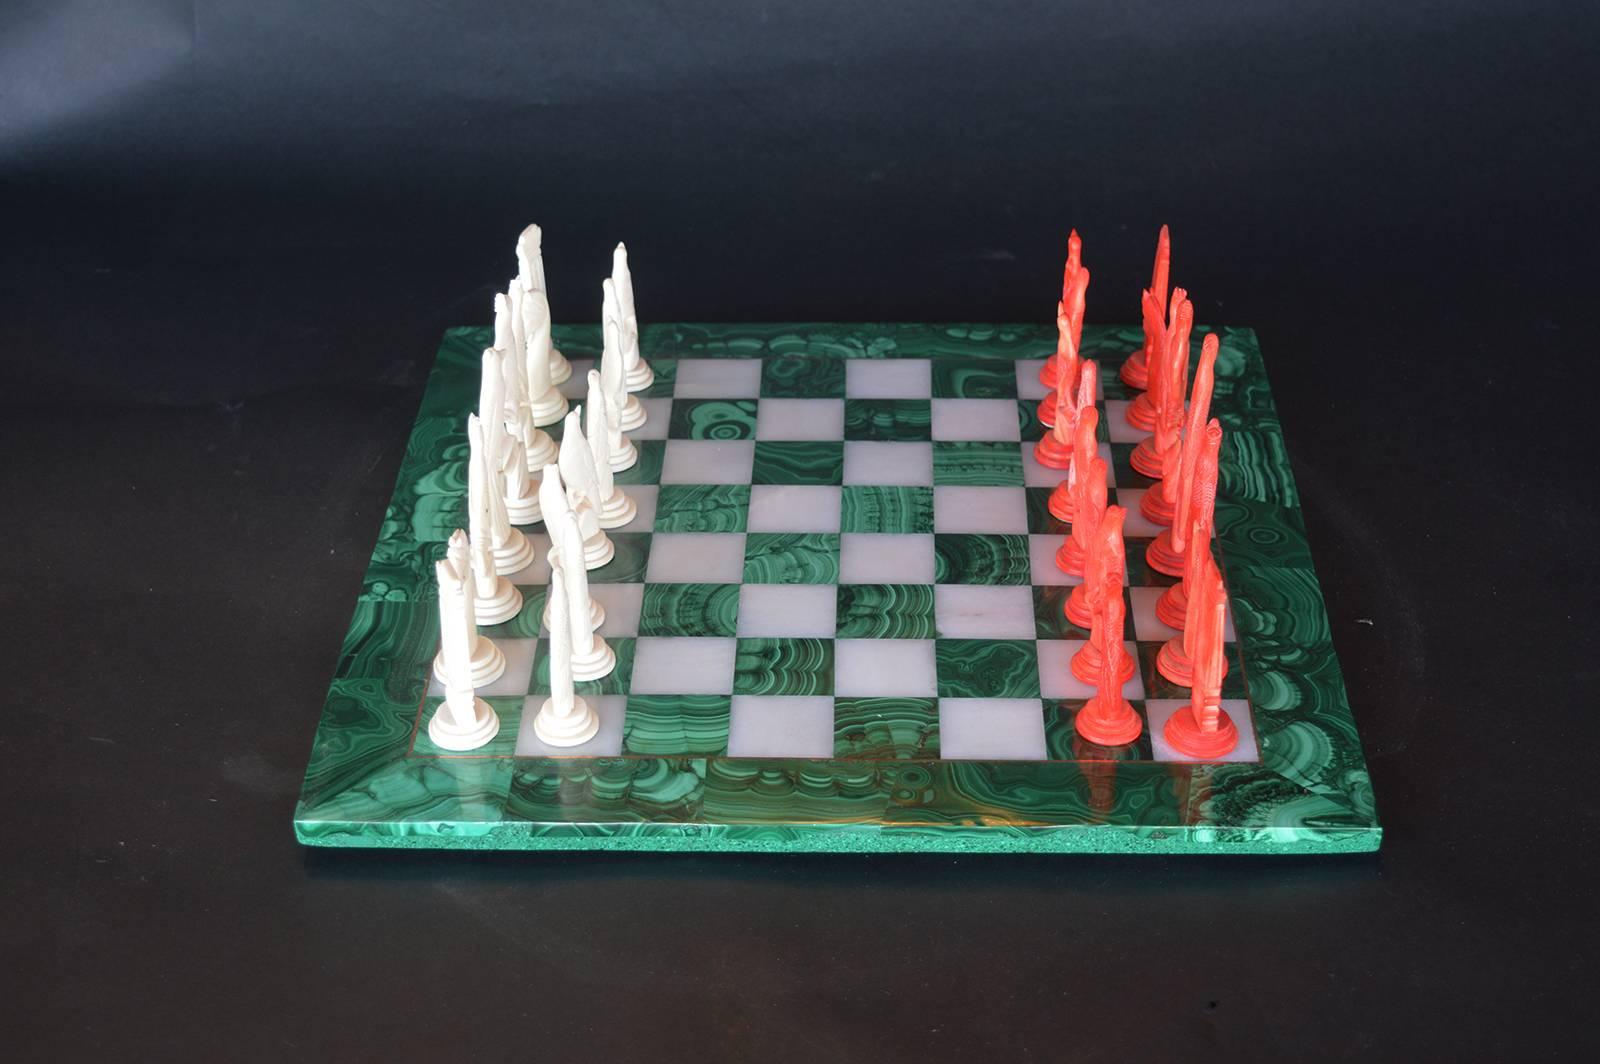 Malachite chess set with bone player pieces.